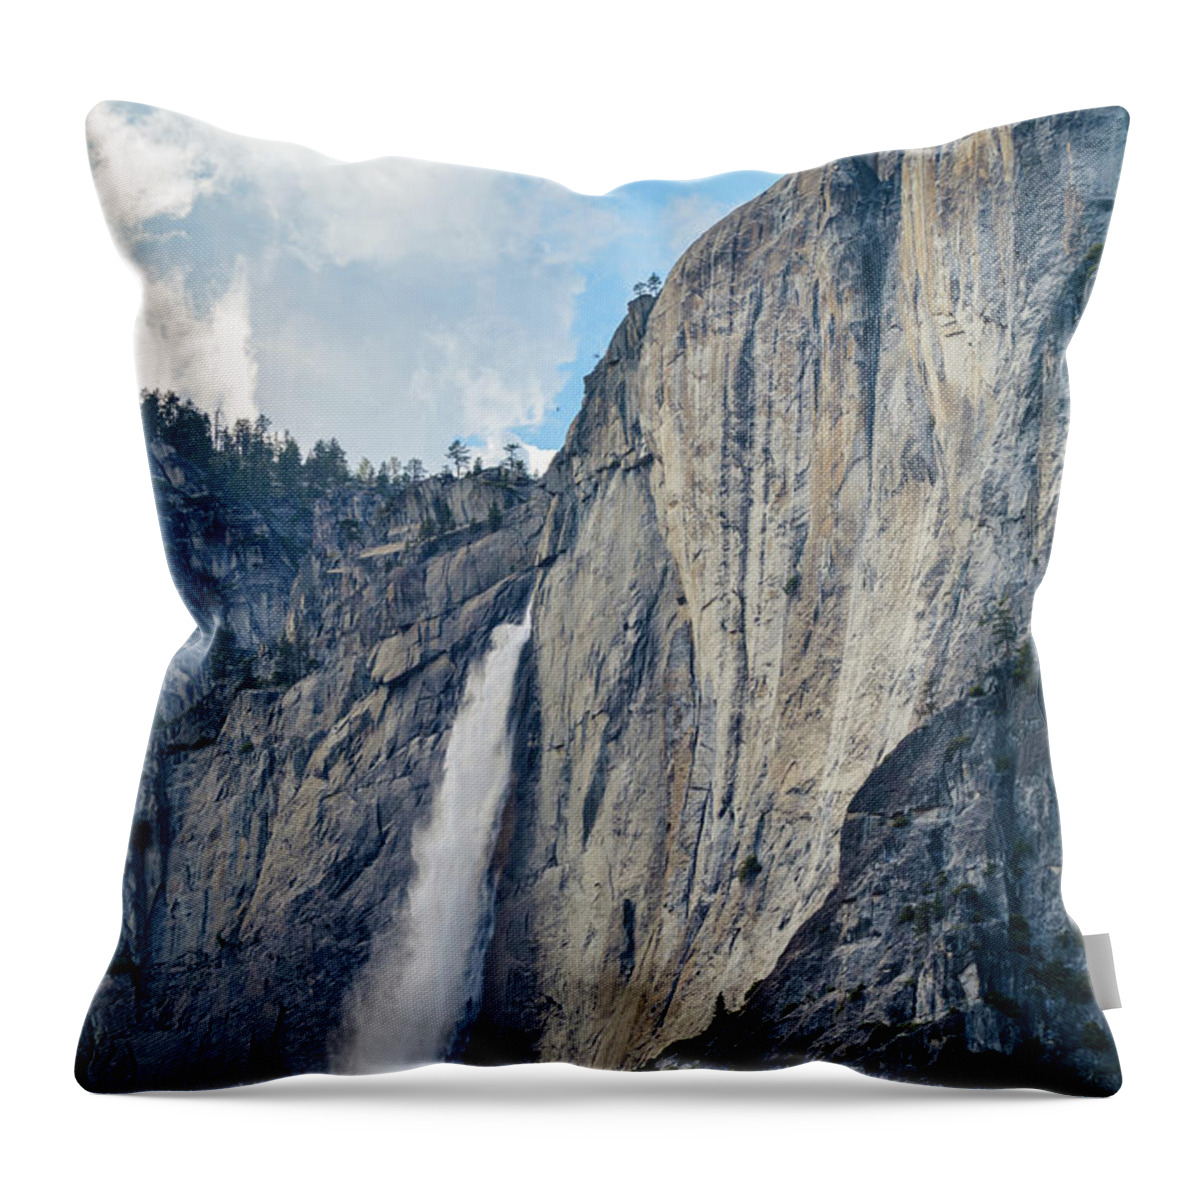 Yosemite National Park Throw Pillow featuring the photograph Yosemite Falls Shadows by Kyle Hanson